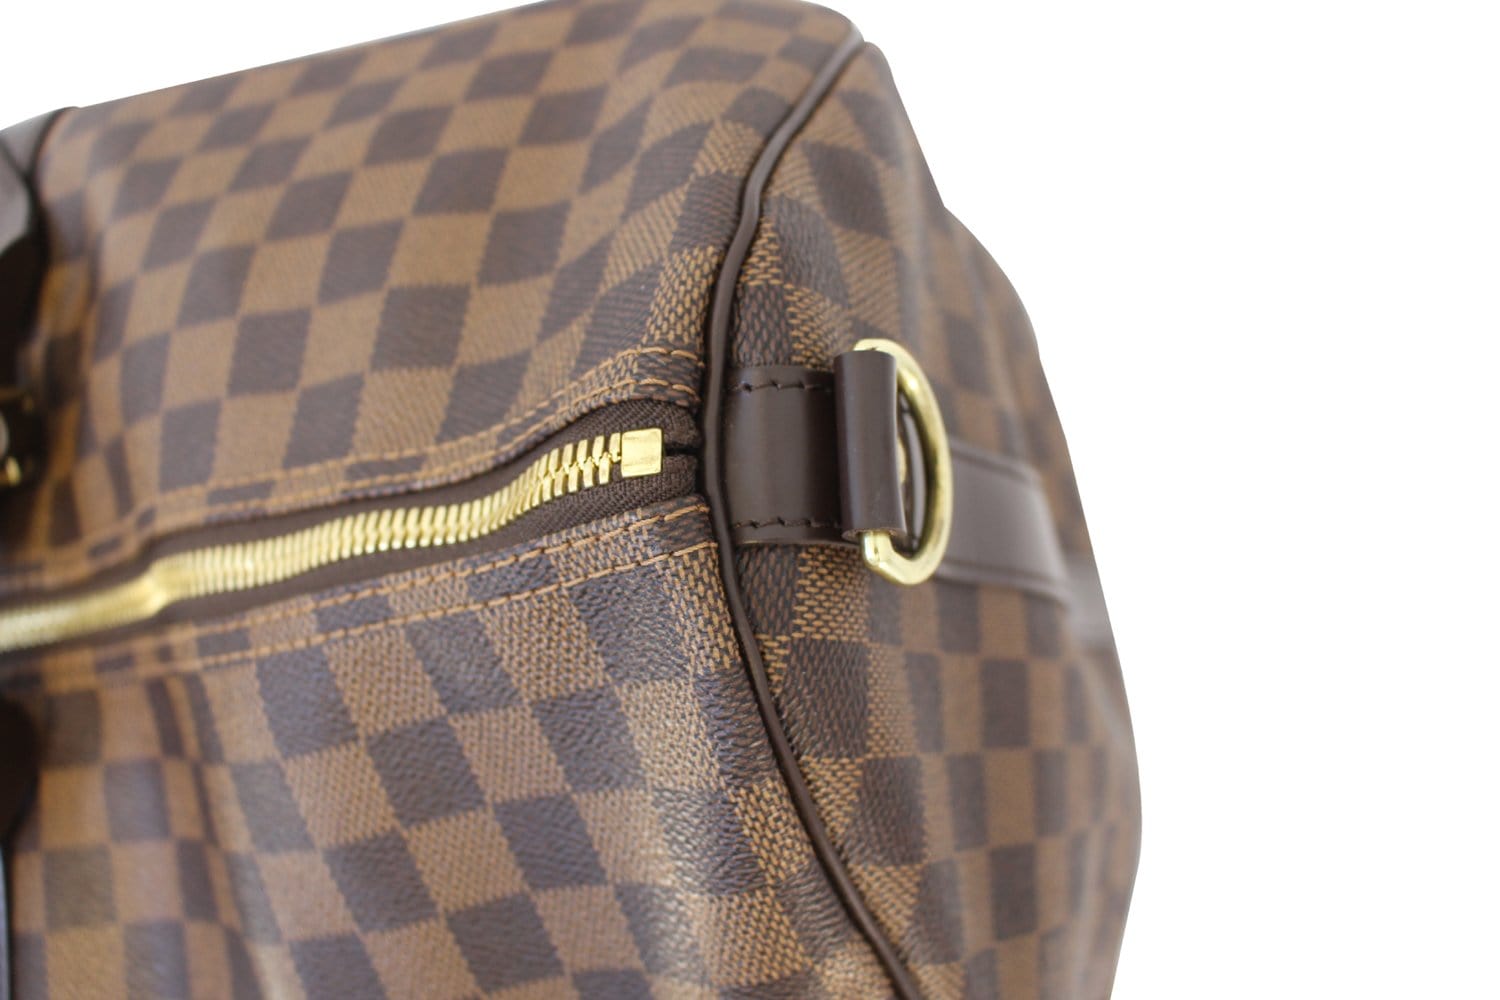 Louis Vuitton Keepall Bandouliere Damier Ebene Bag